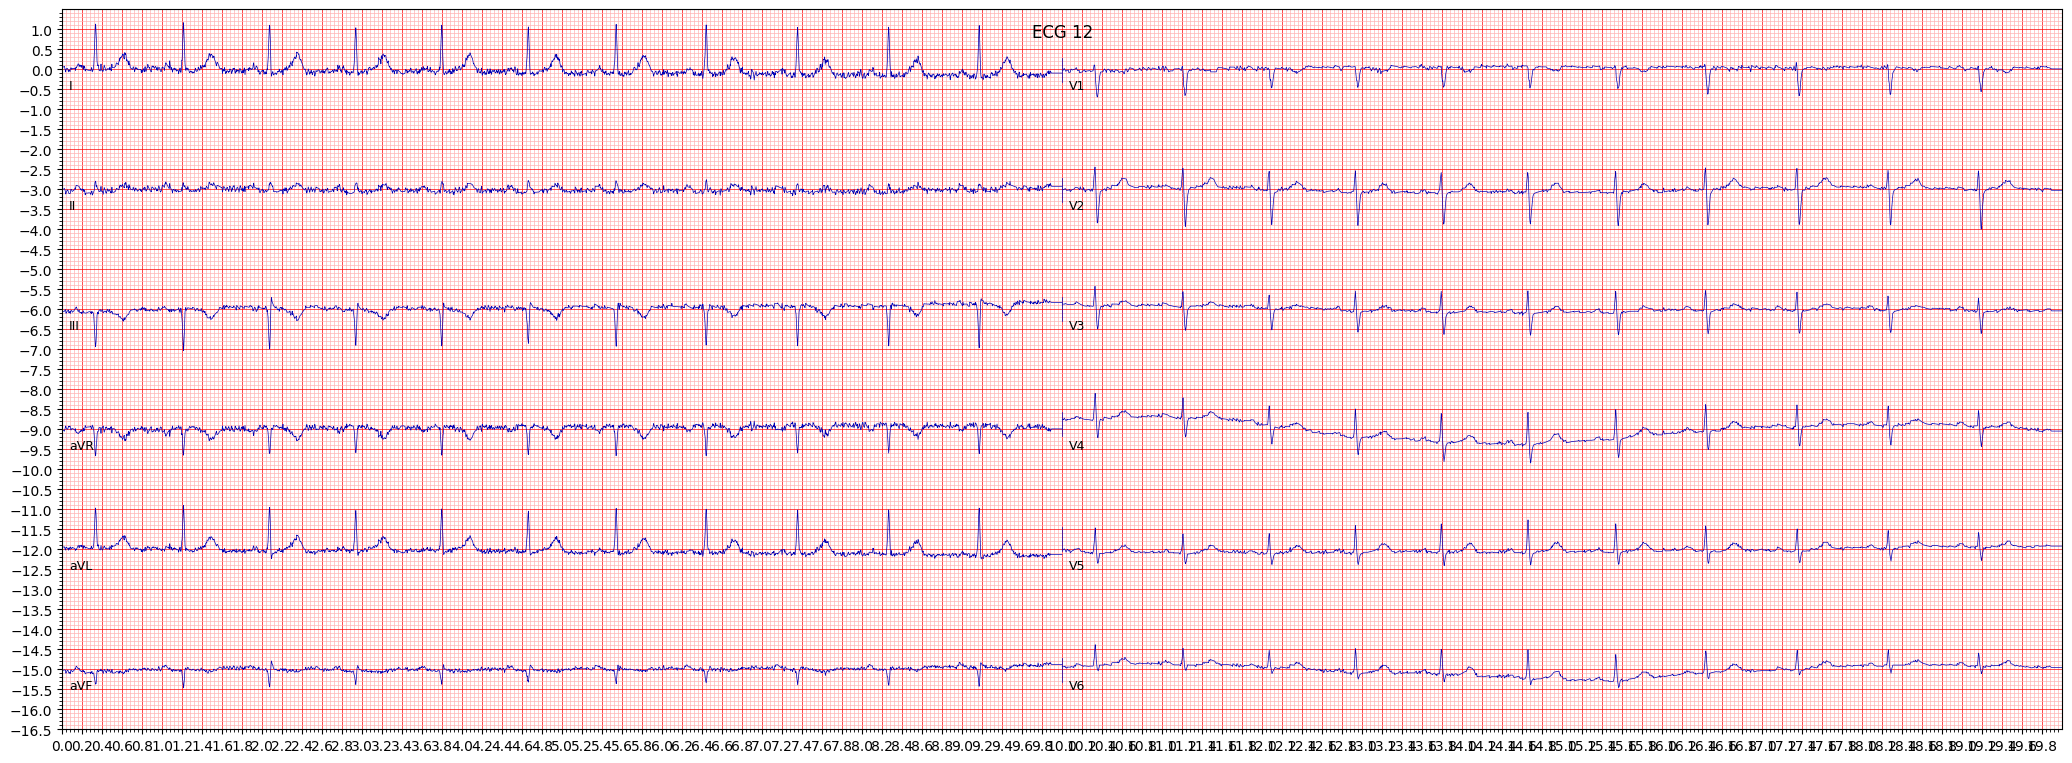 inferior myocardial infarction (IMI) example 1606